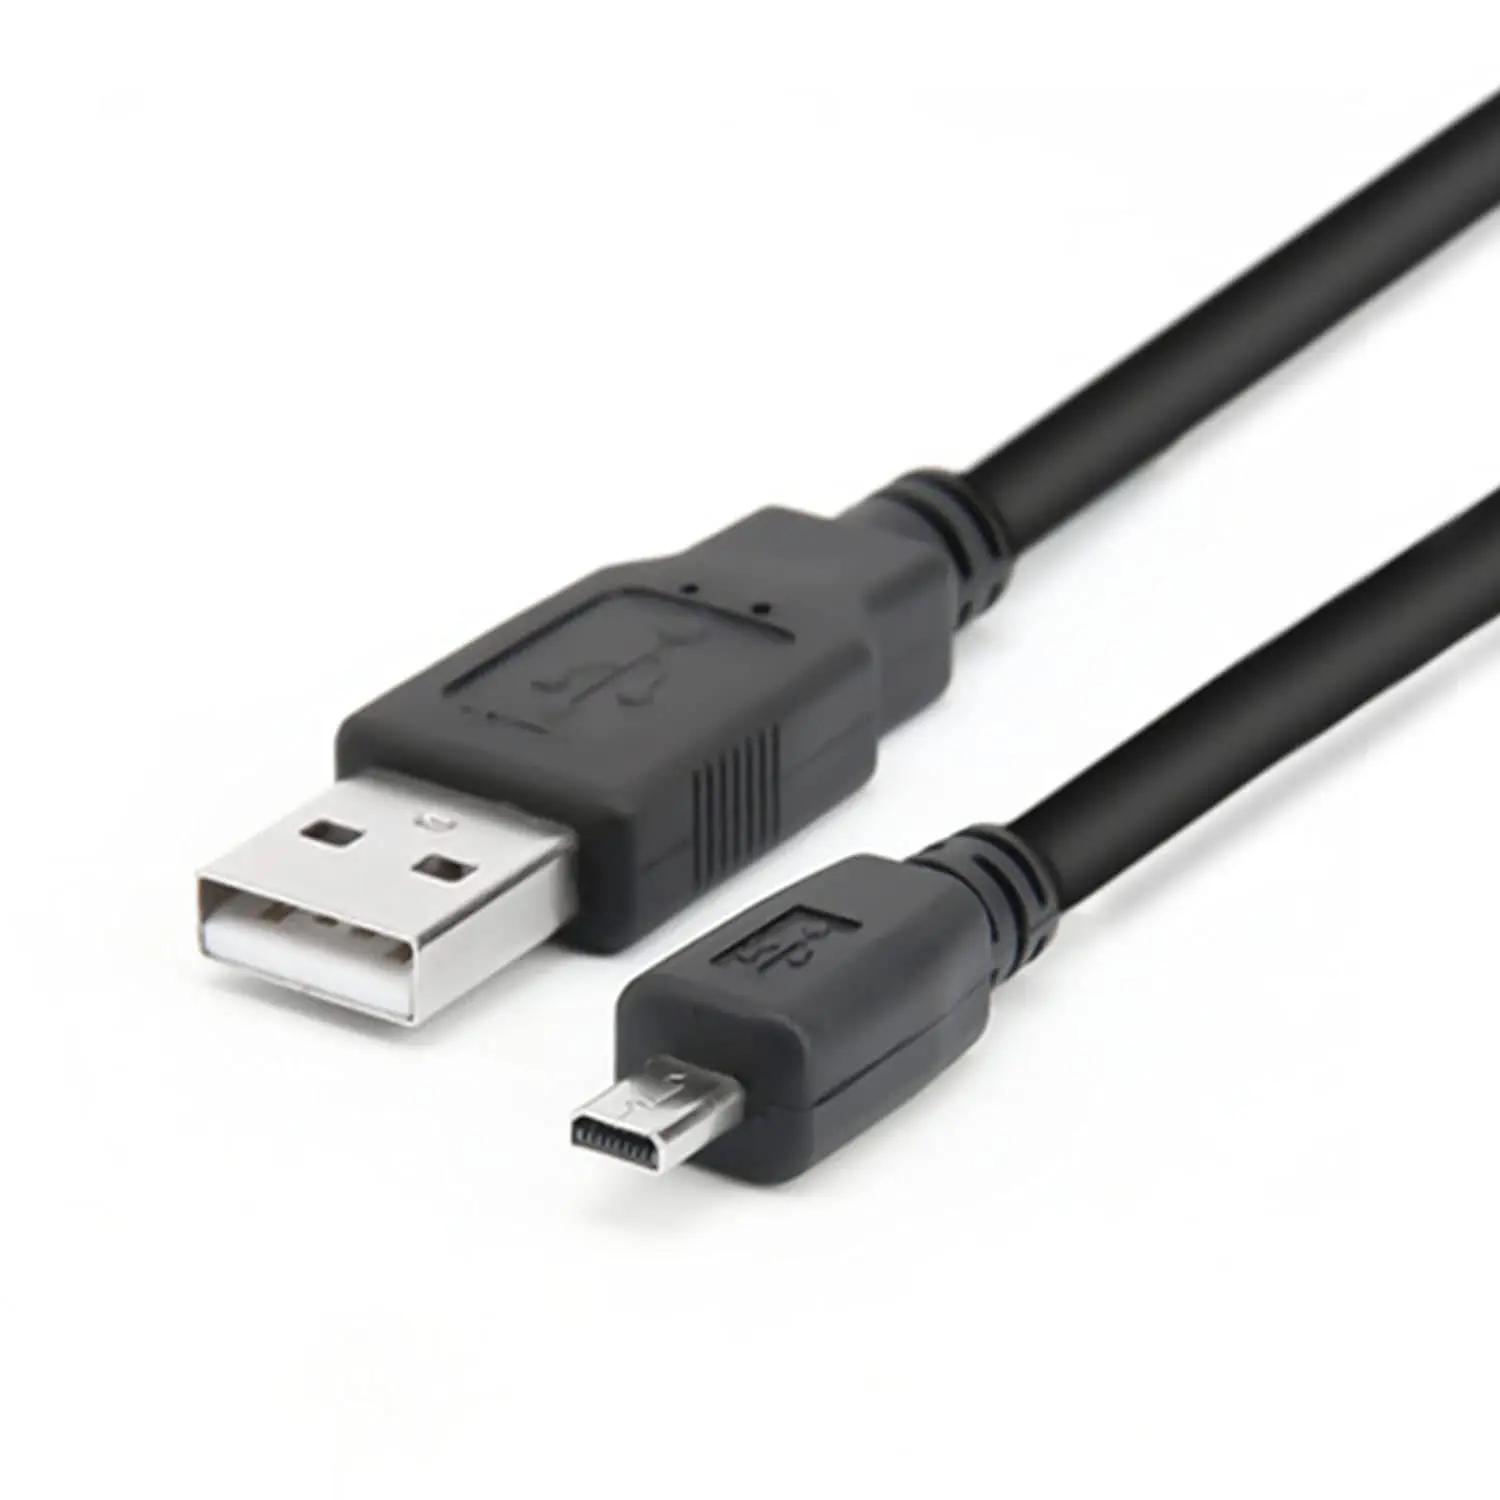 USB Camera Data Charging Cable Cord for Nikon Coolpix A10 L830 L810 L29 L31 L32 L24, UC-E6 UC-e16 UC-E23 UC-E17, S3700 S6500